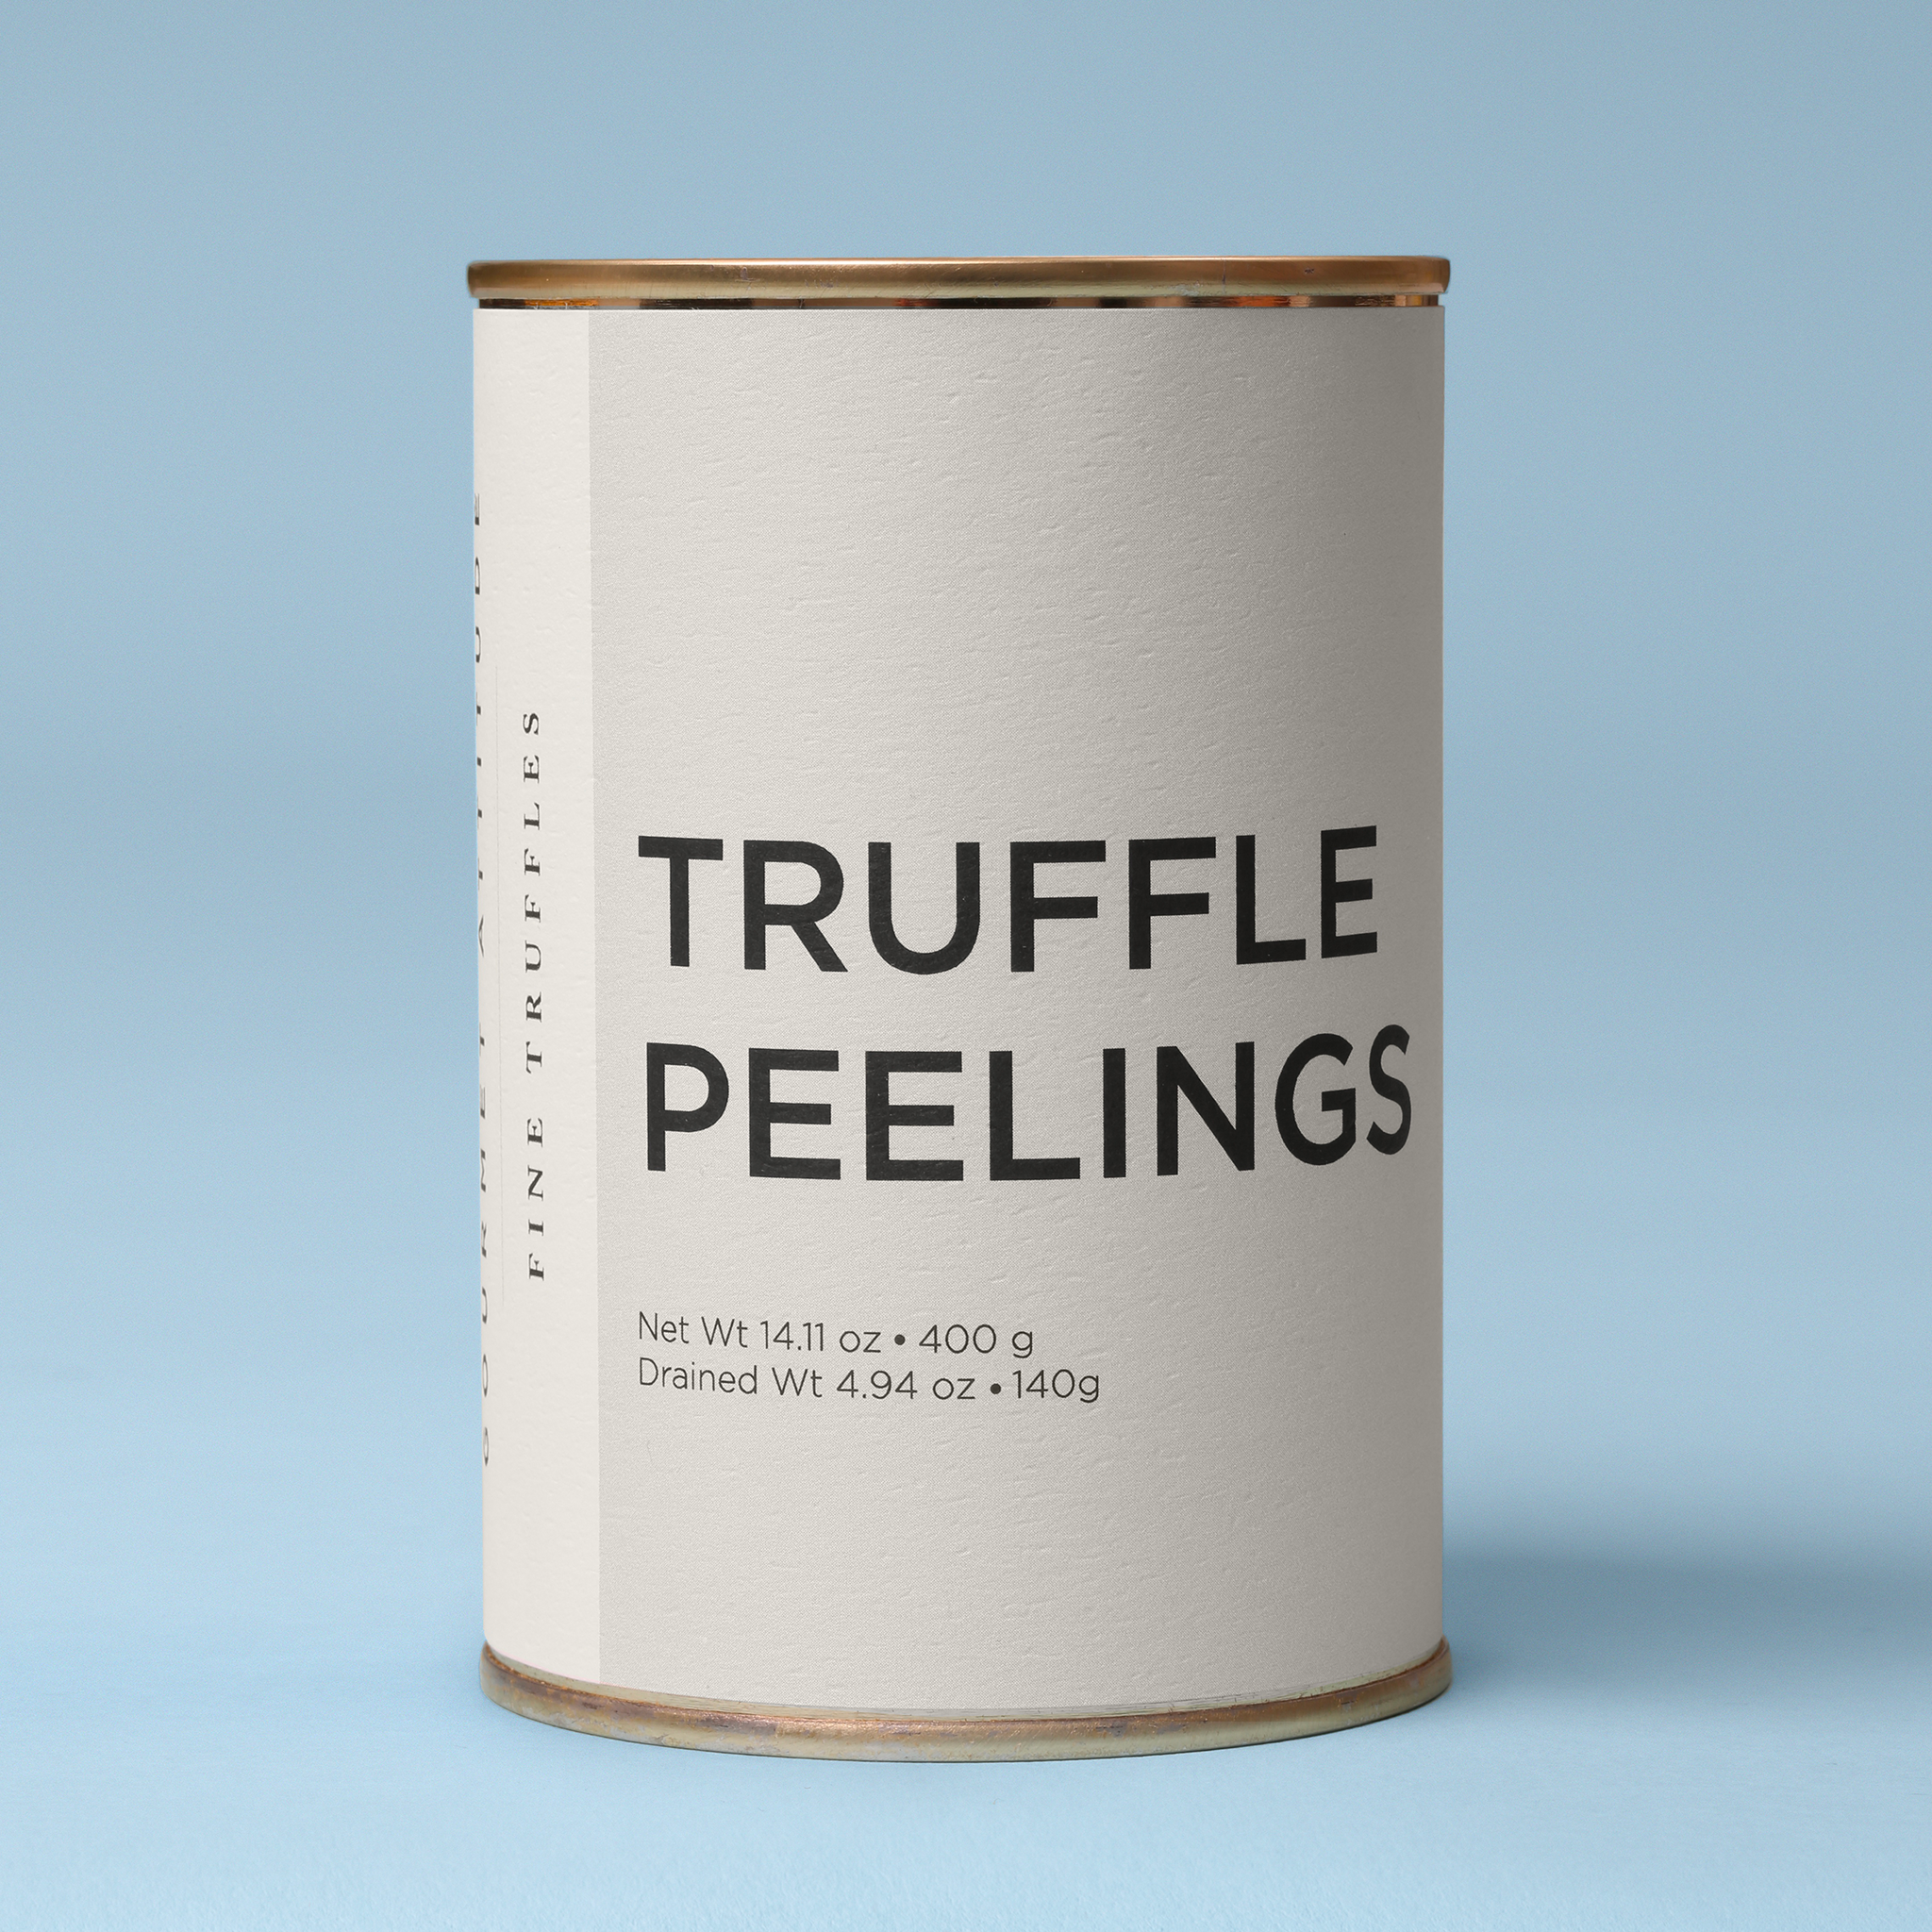 Truffle Peelings